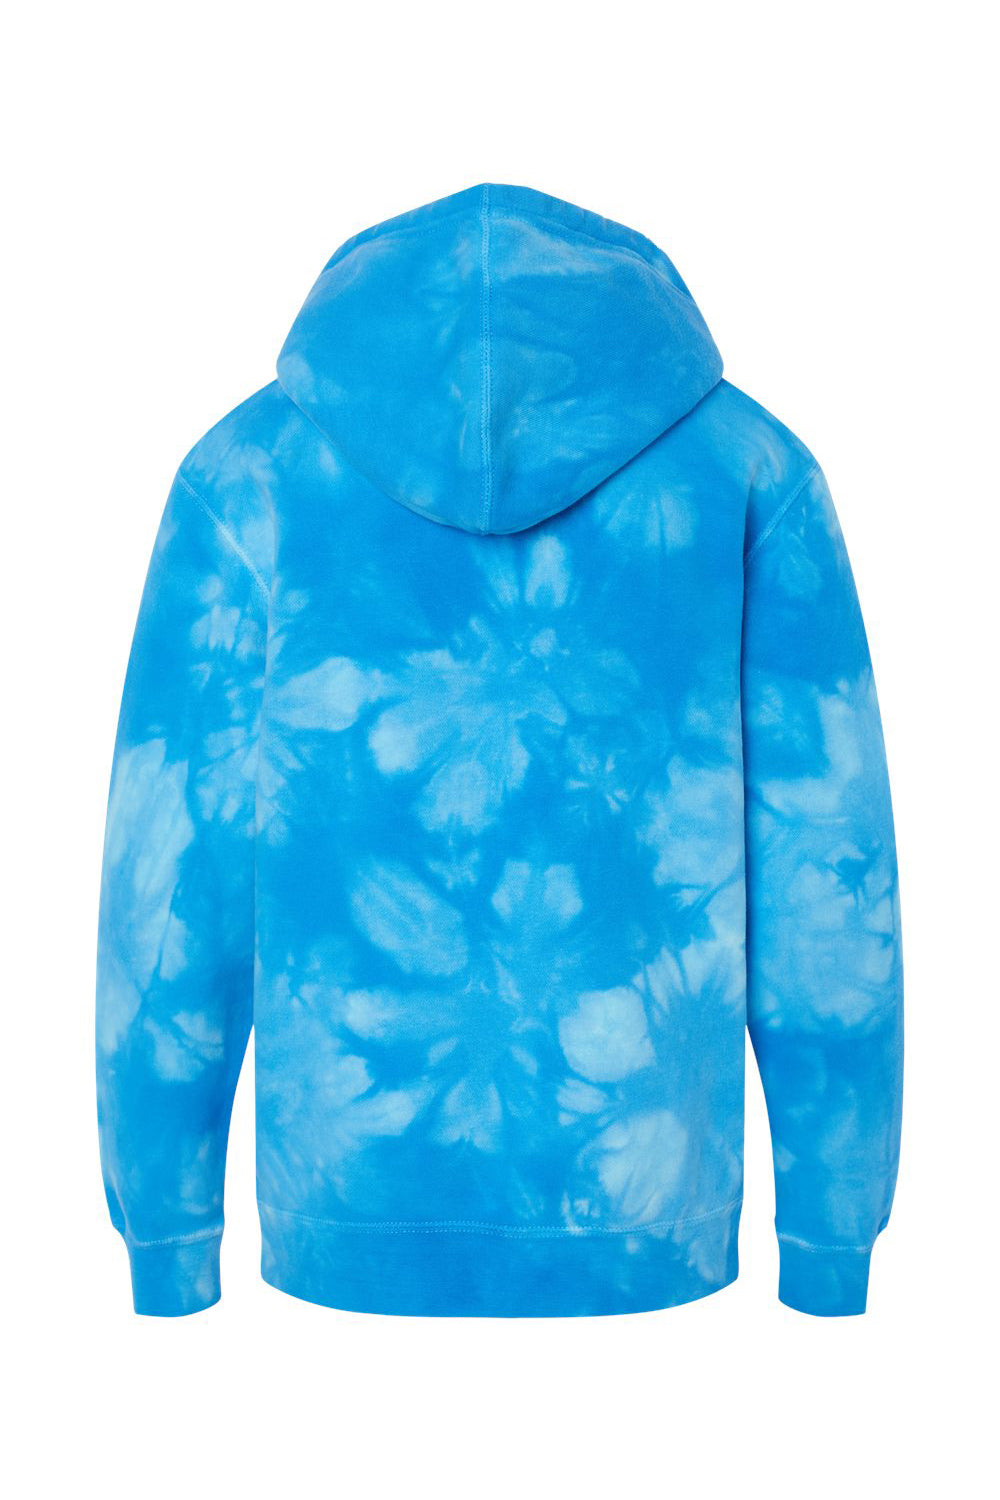 Independent Trading Co. PRM1500TD Youth Tie-Dye Hooded Sweatshirt Hoodie Aqua Blue Flat Back